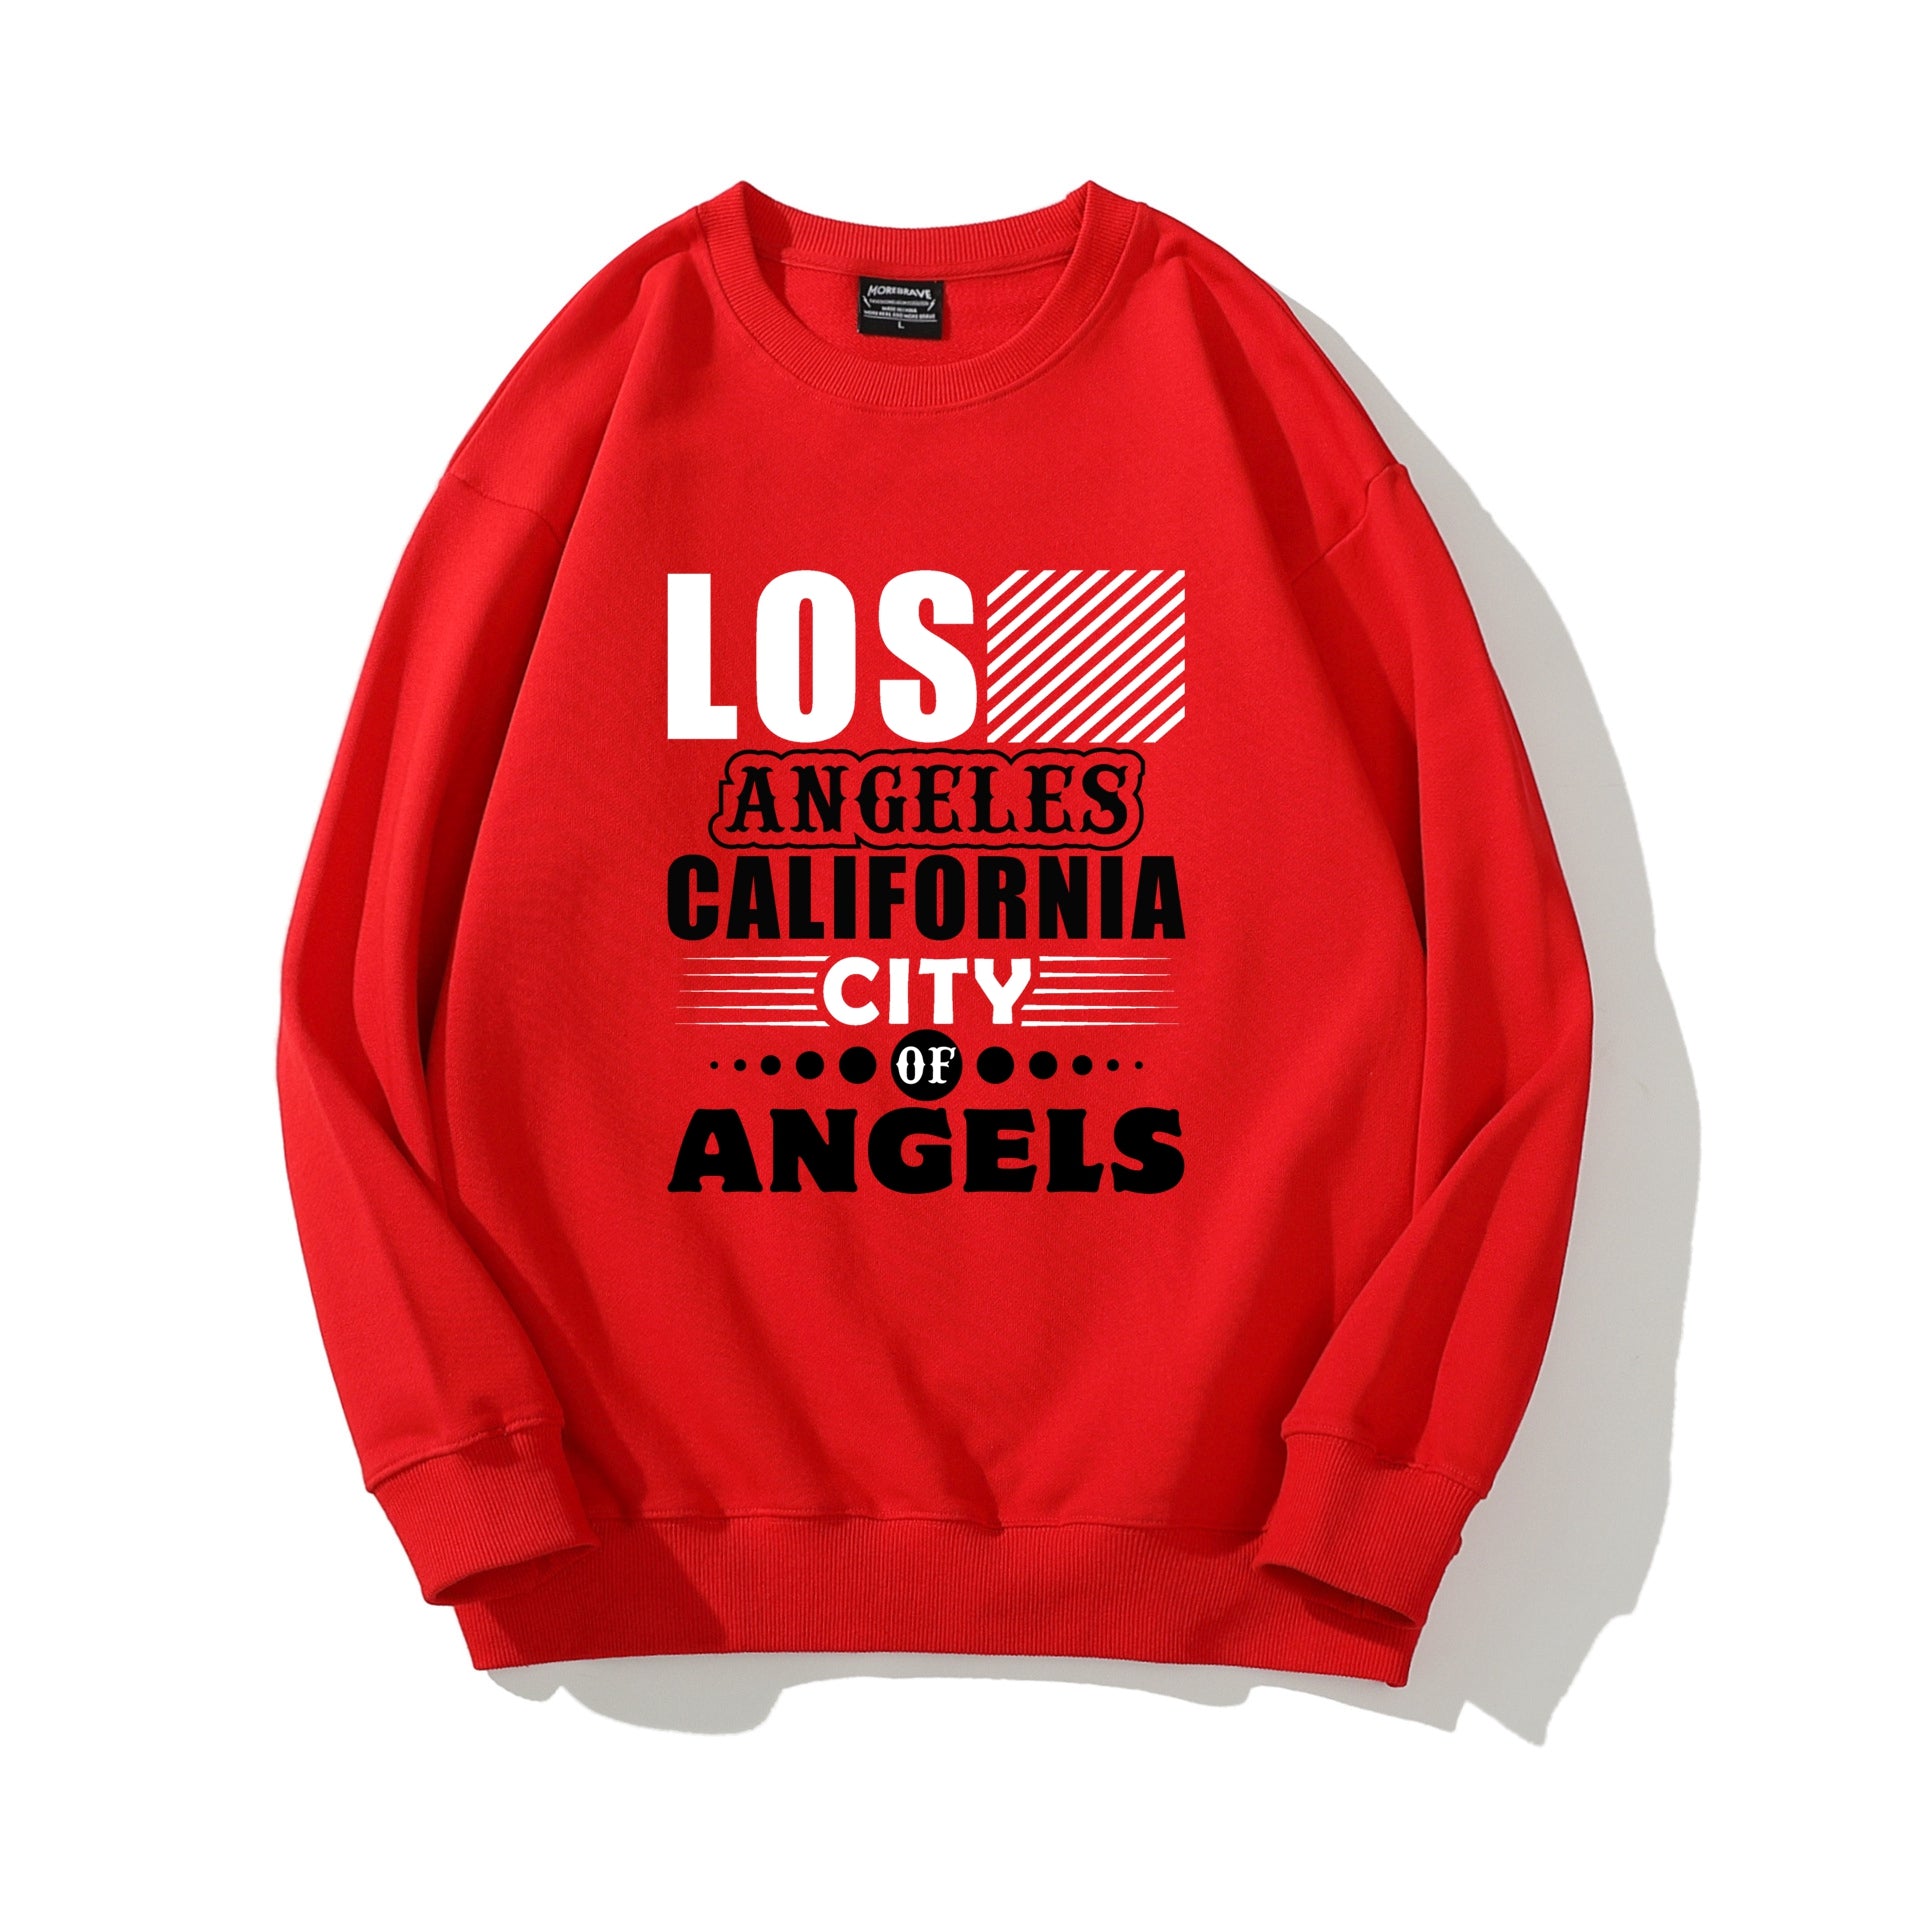 Los Angeles Sweatshirt City of Angels California Crewneck Cotton Sweatshirt